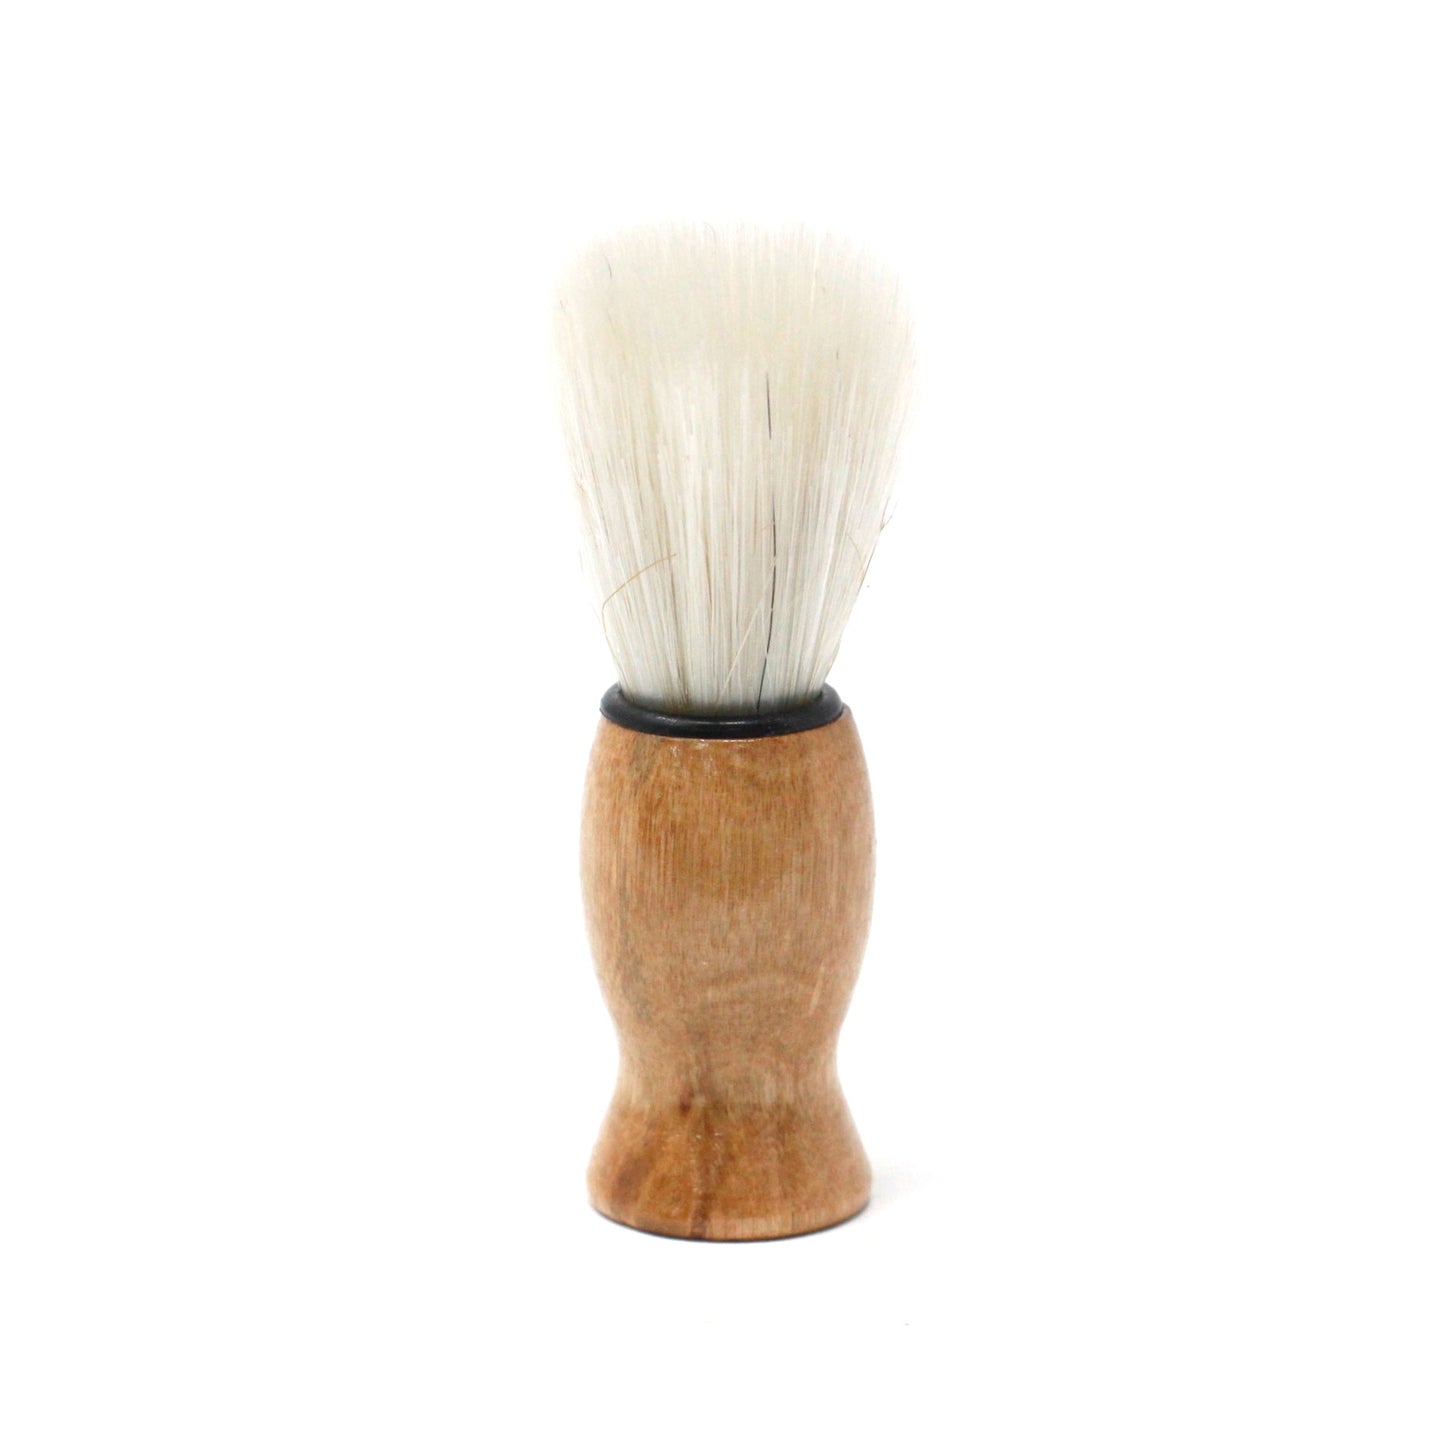 Old Fashioned Wooden Shaving Brush